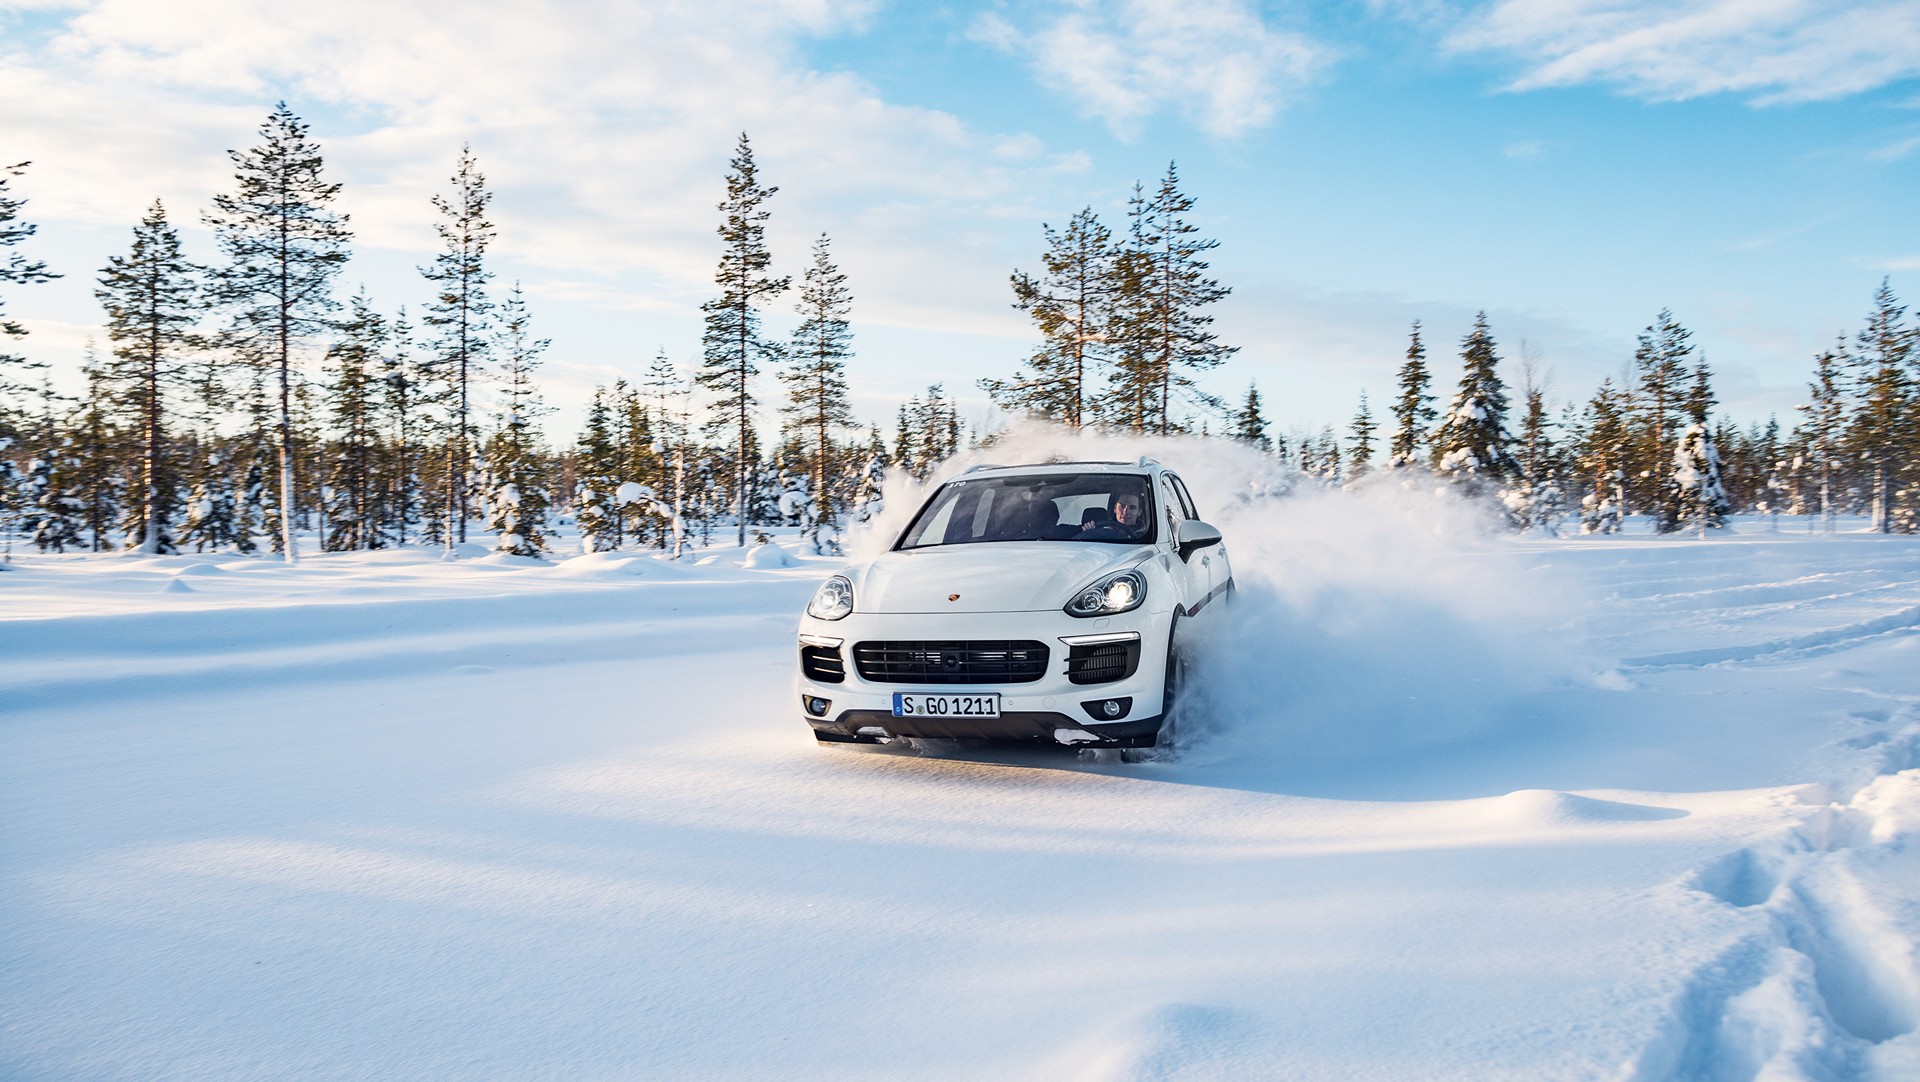 Cayenne S, Porsche Driving Experience Winter, Levi, Finland © Dr. Ing. h.c. F. Porsche AG